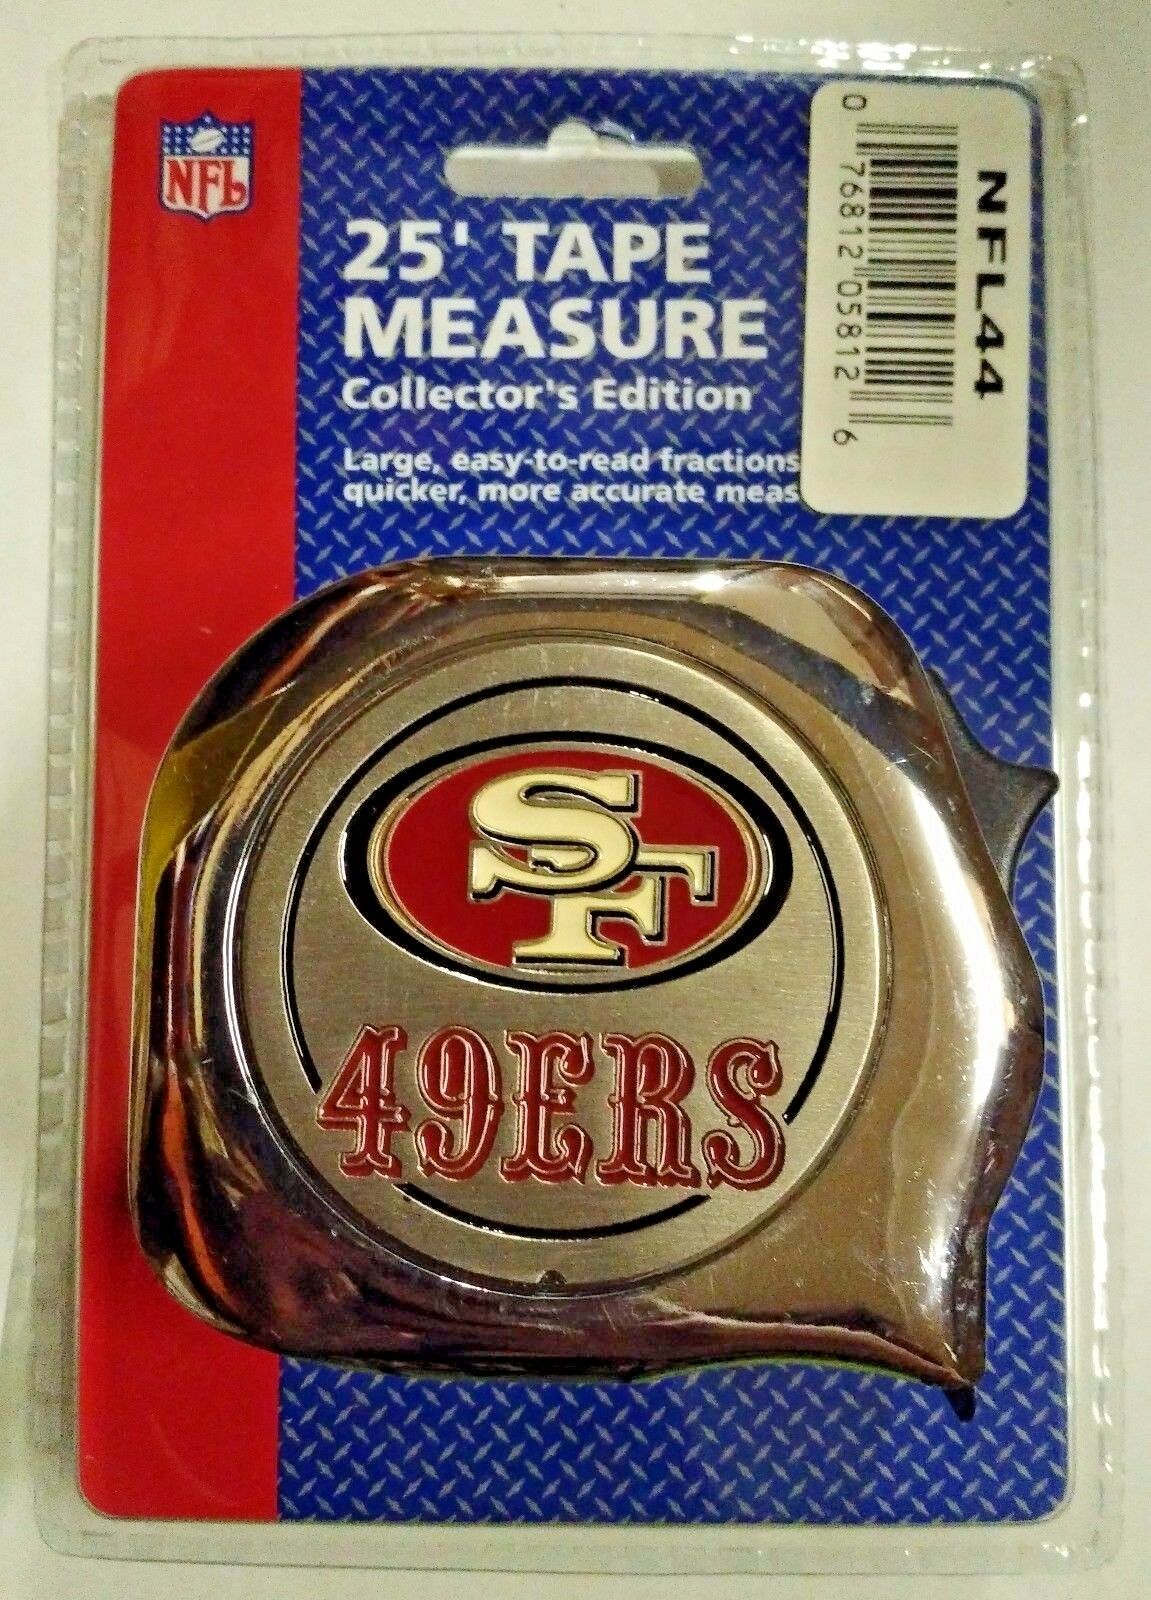 Great Neck NFL44 1" x 25' NFL Tape Measure San Francisco 49ers